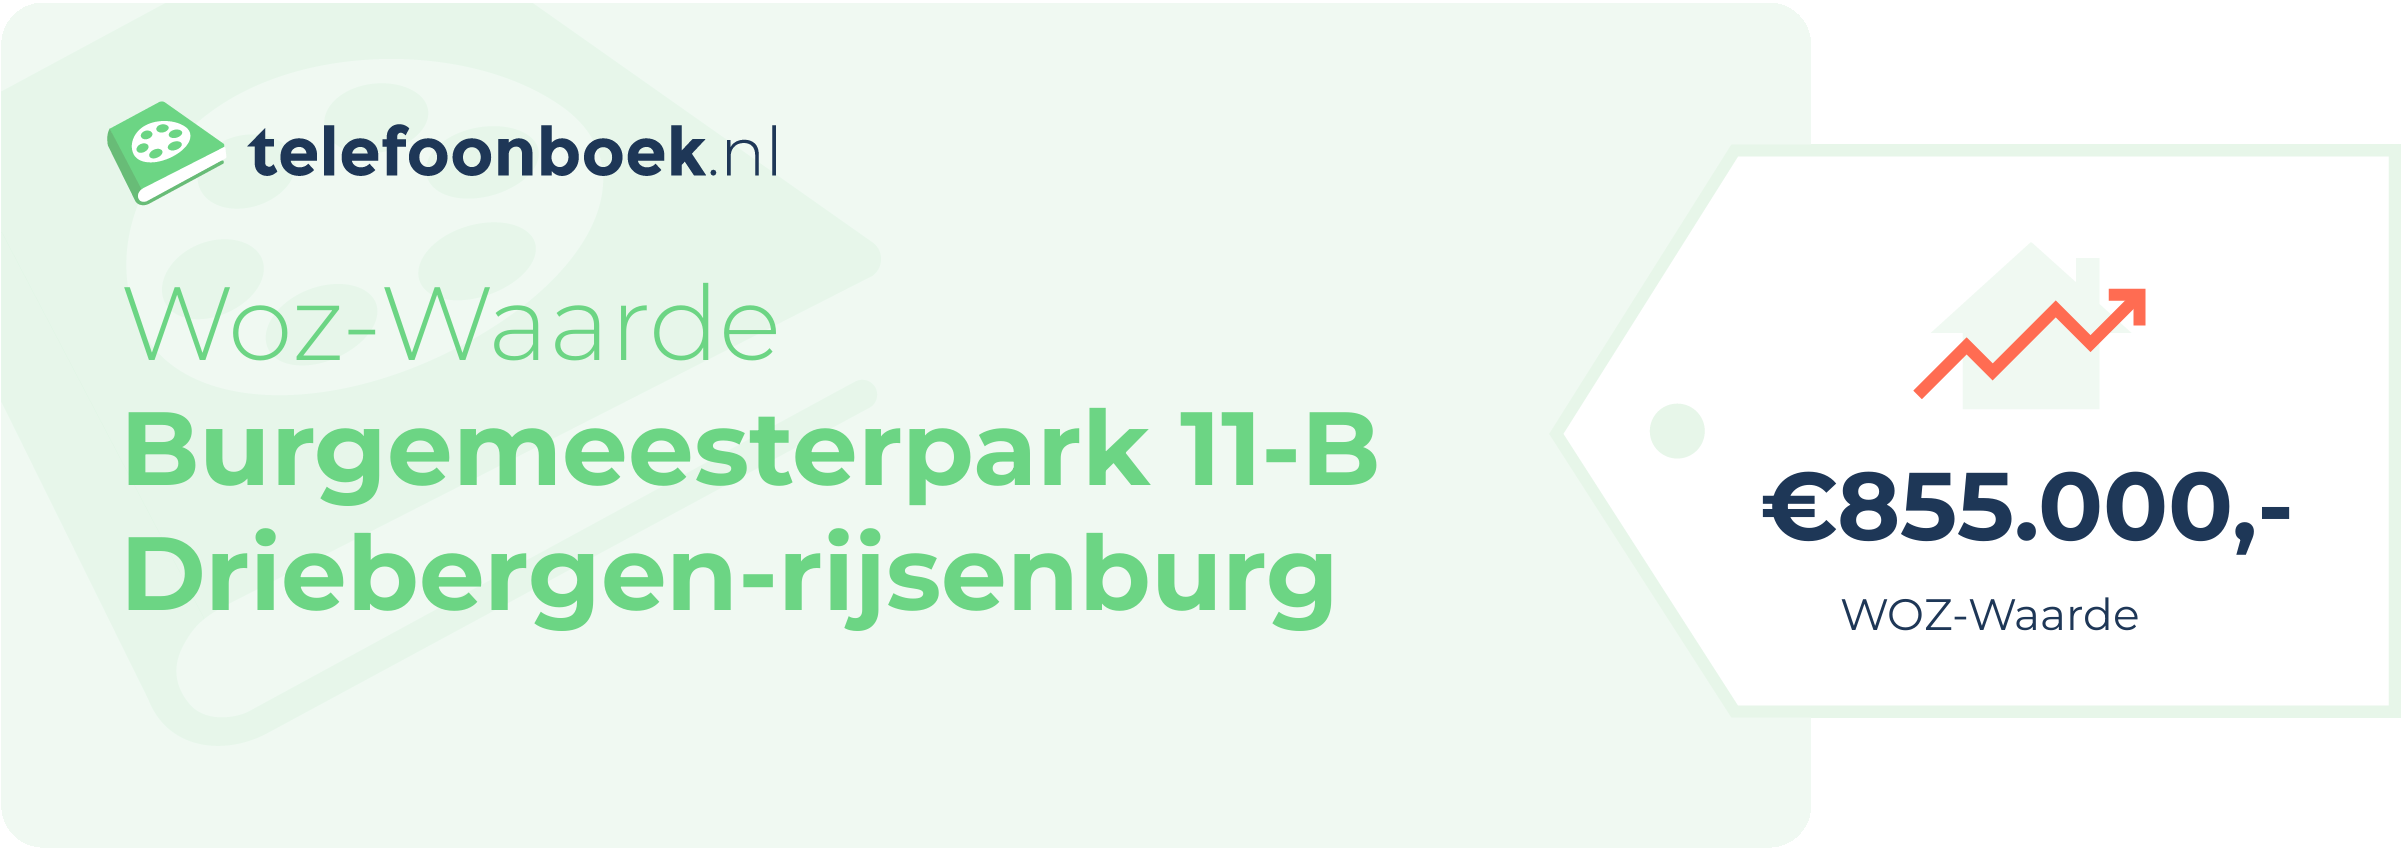 WOZ-waarde Burgemeesterpark 11-B Driebergen-Rijsenburg